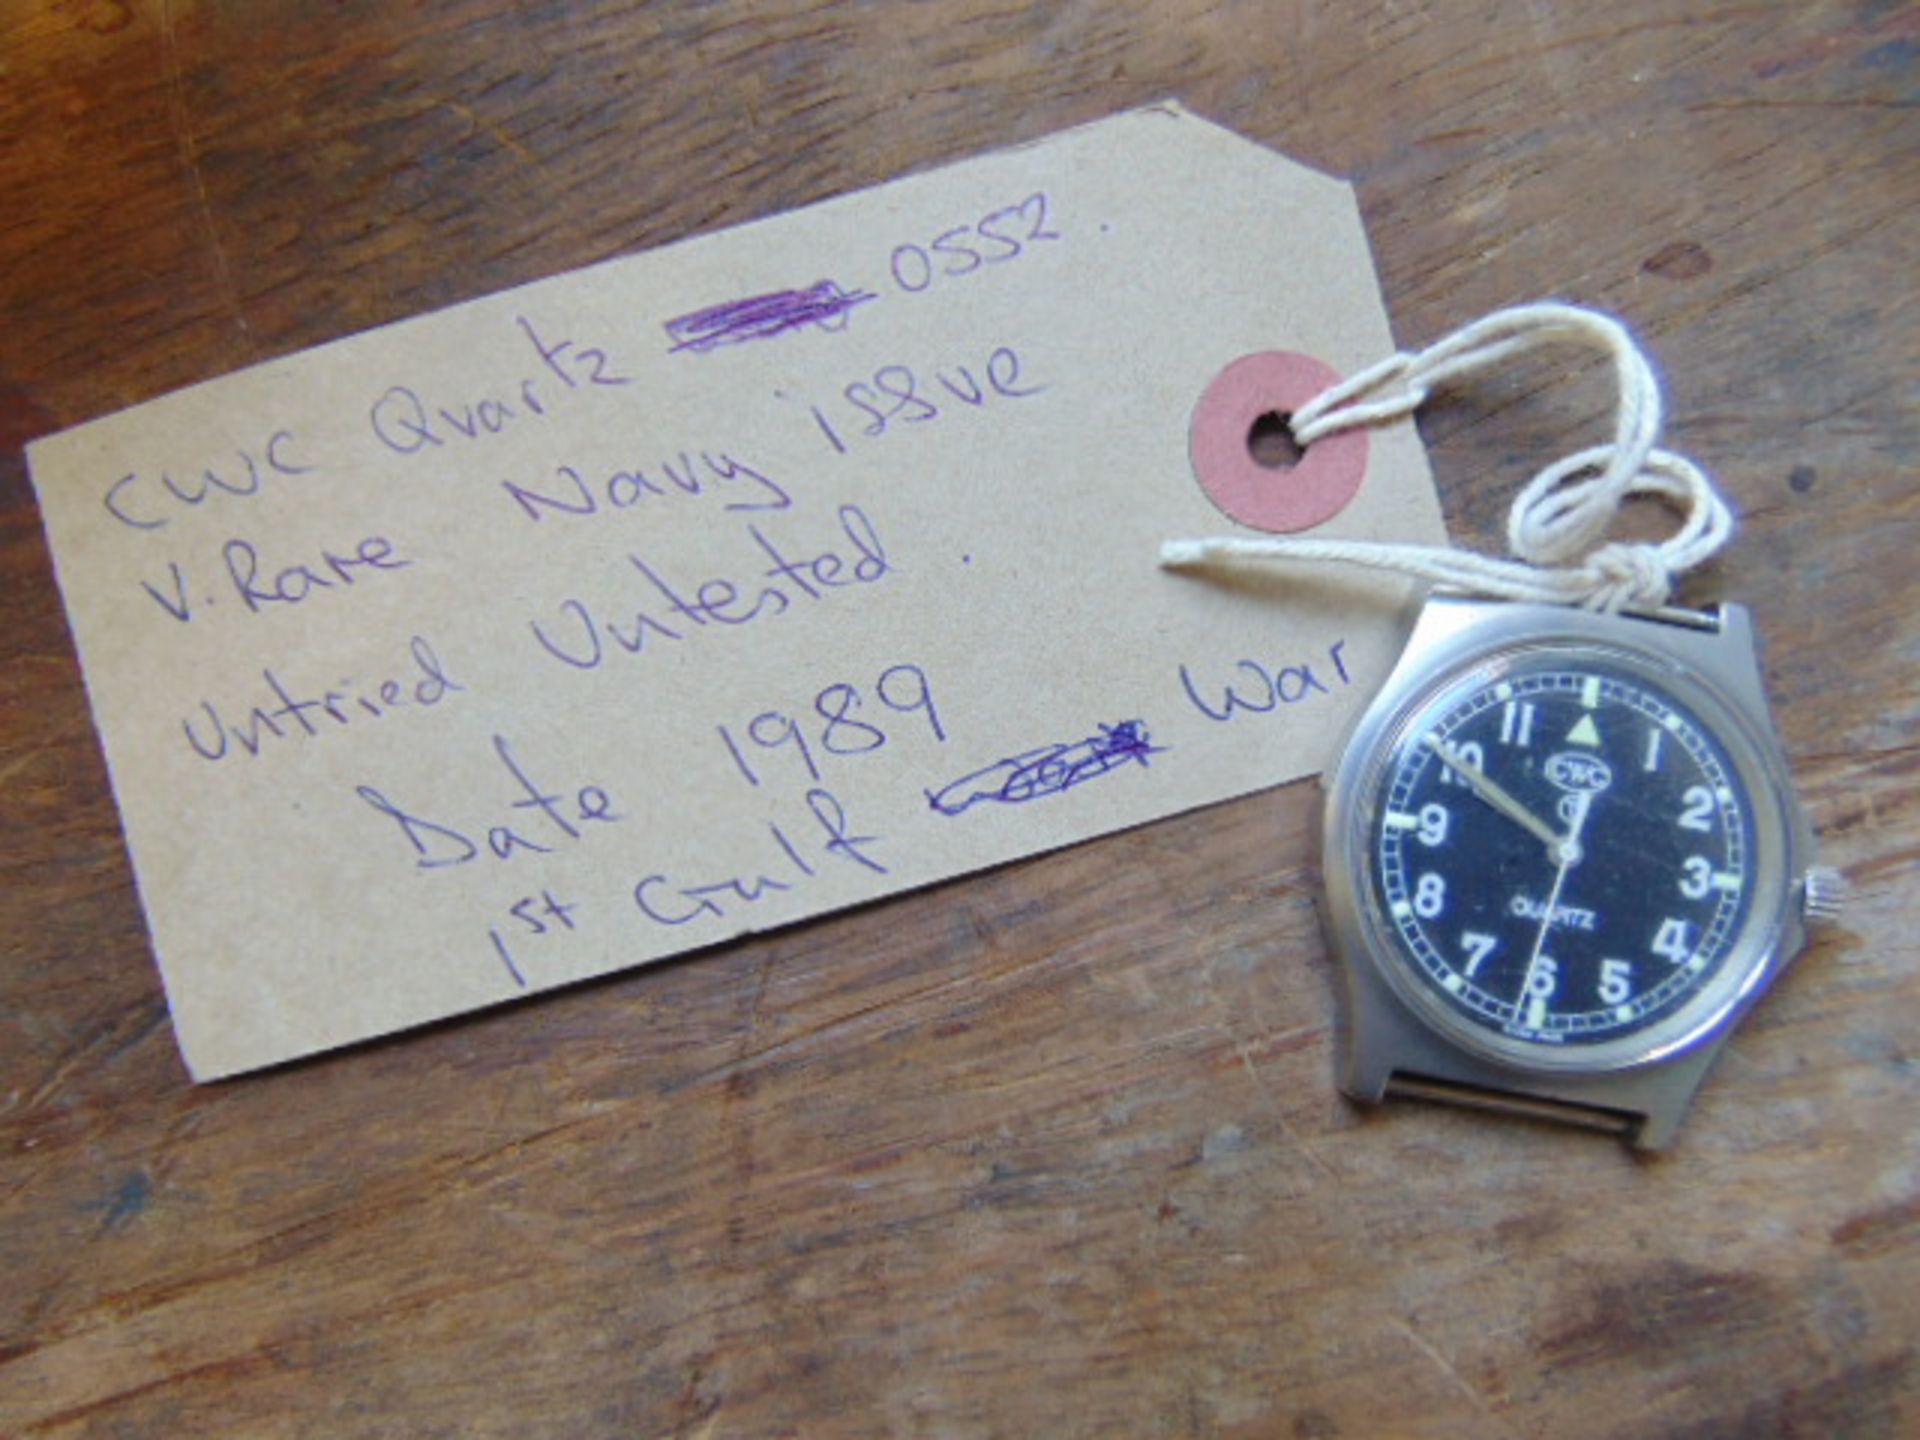 Very Rare Genuine, Navy Issue 0552, CWC Quartz Wrist Watch - Image 2 of 4